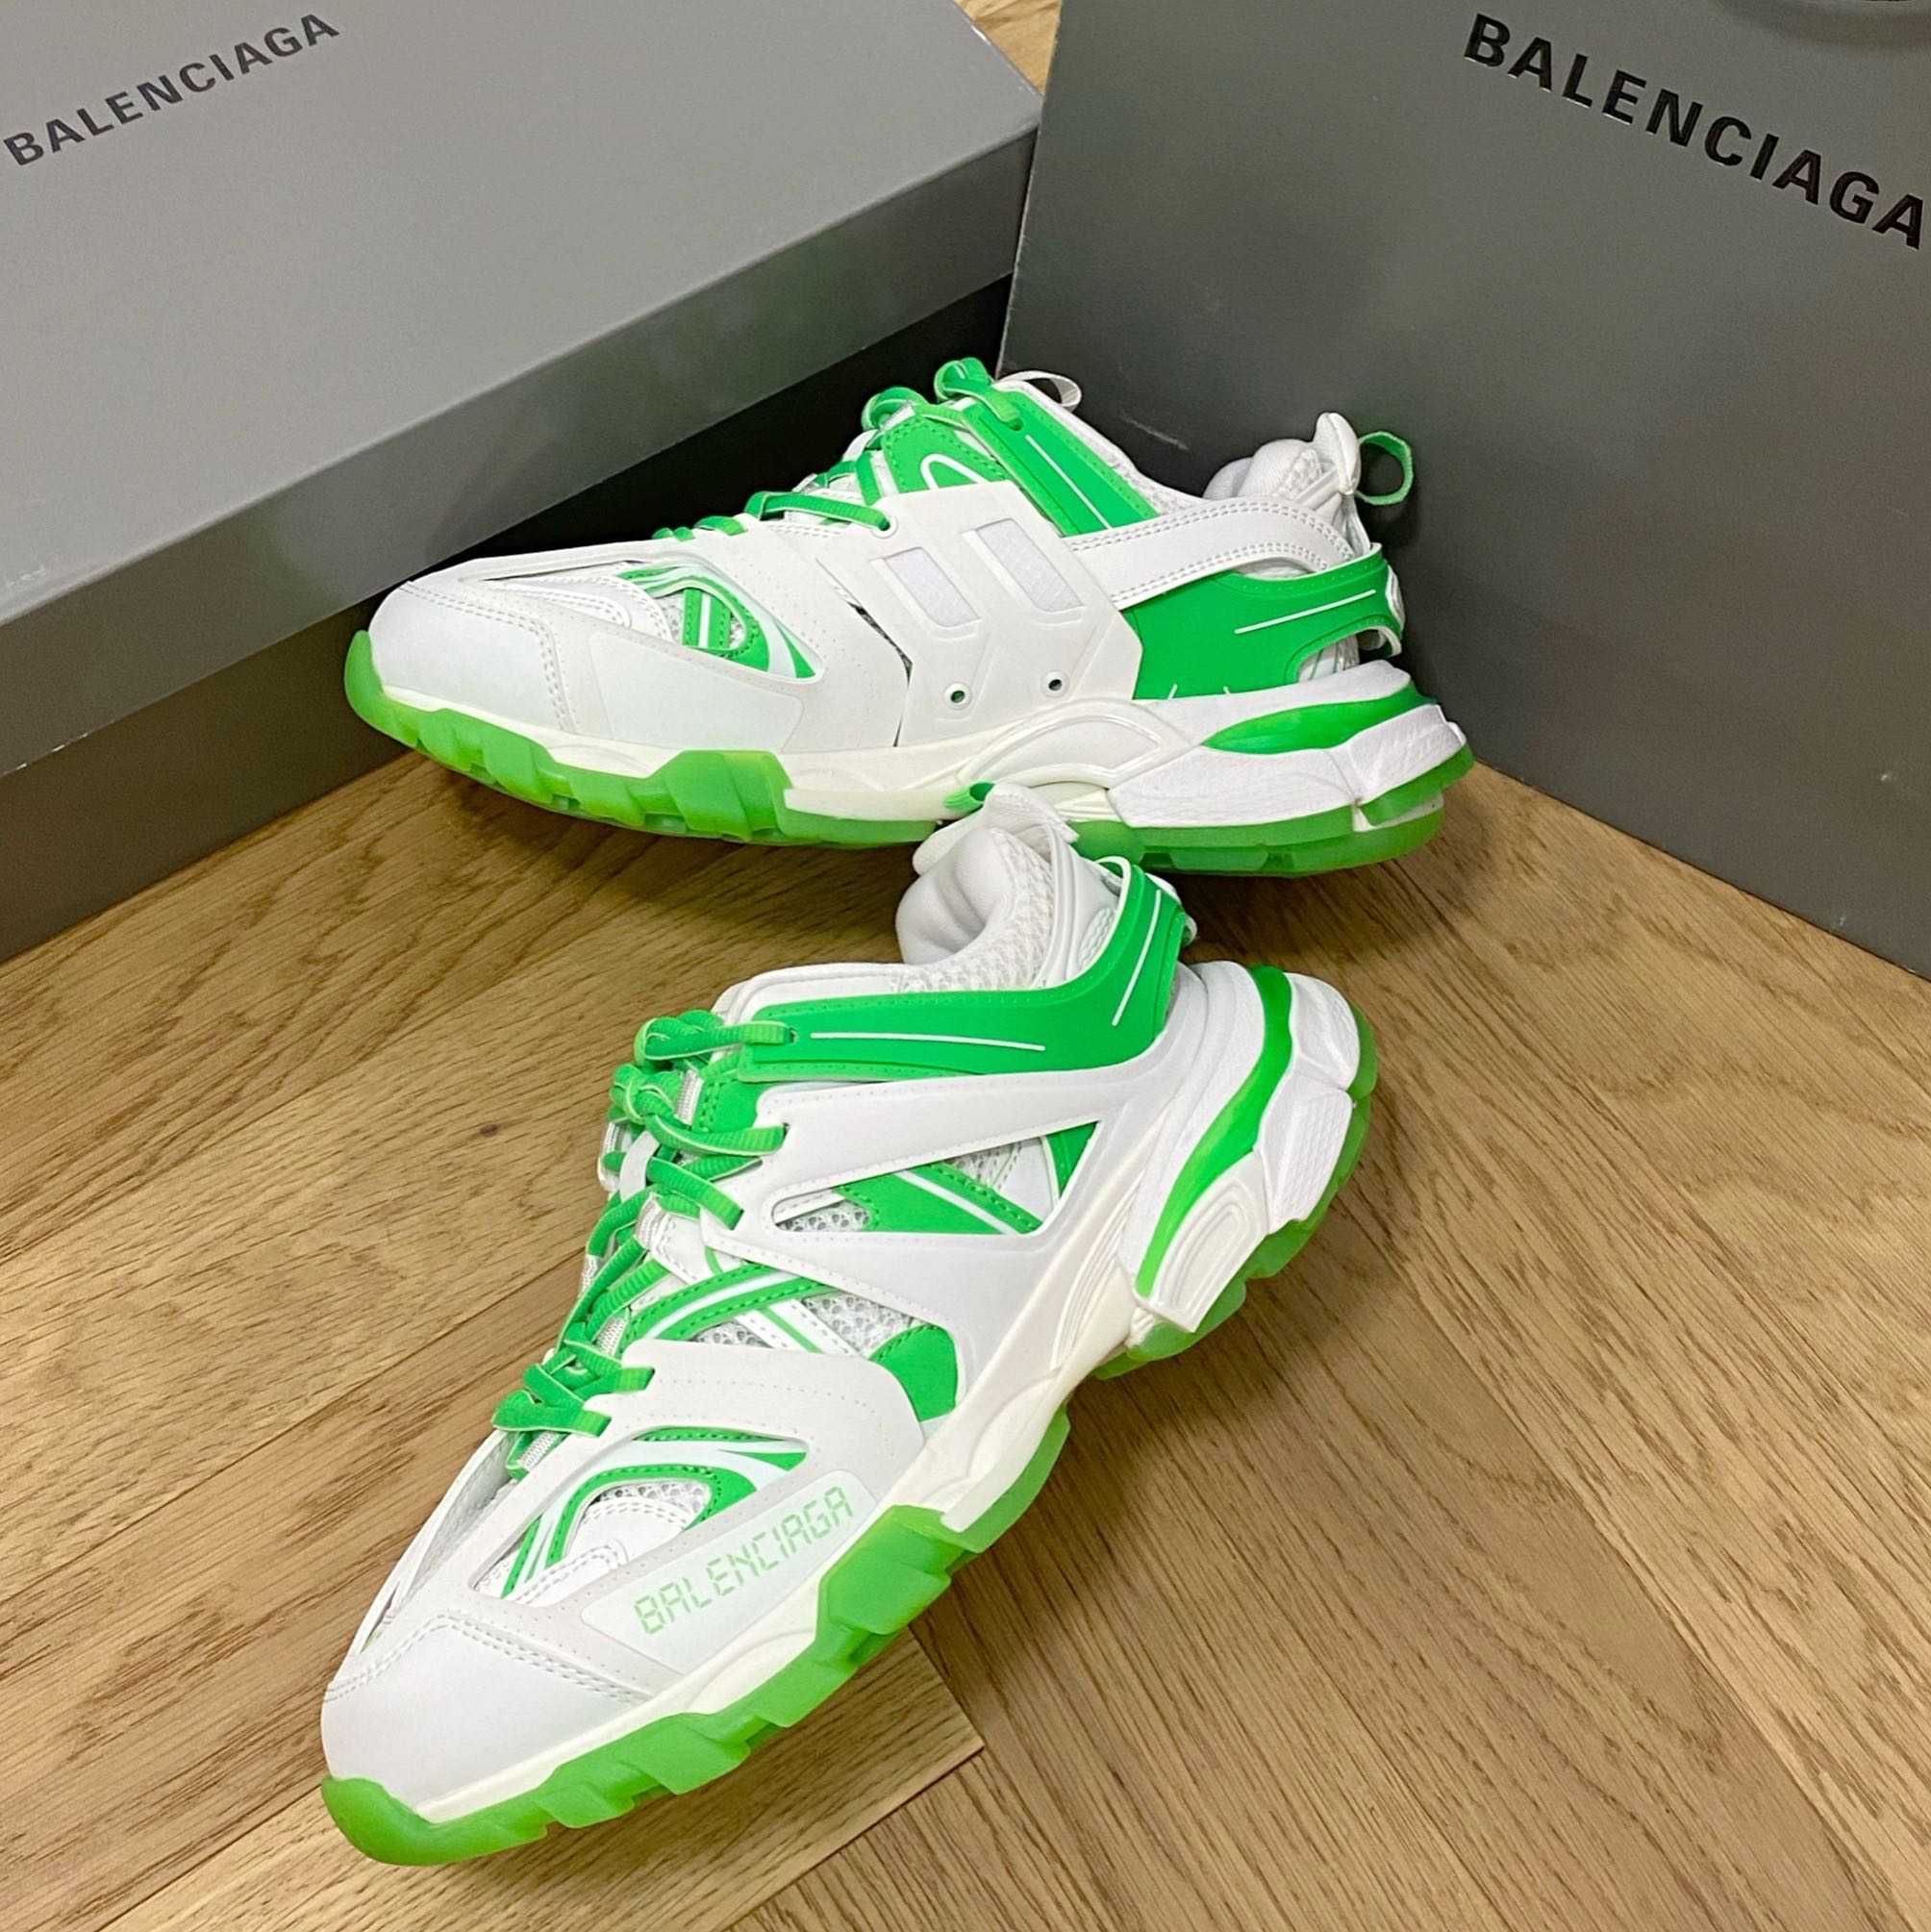 Adidasii Balenciaga Track - Premium